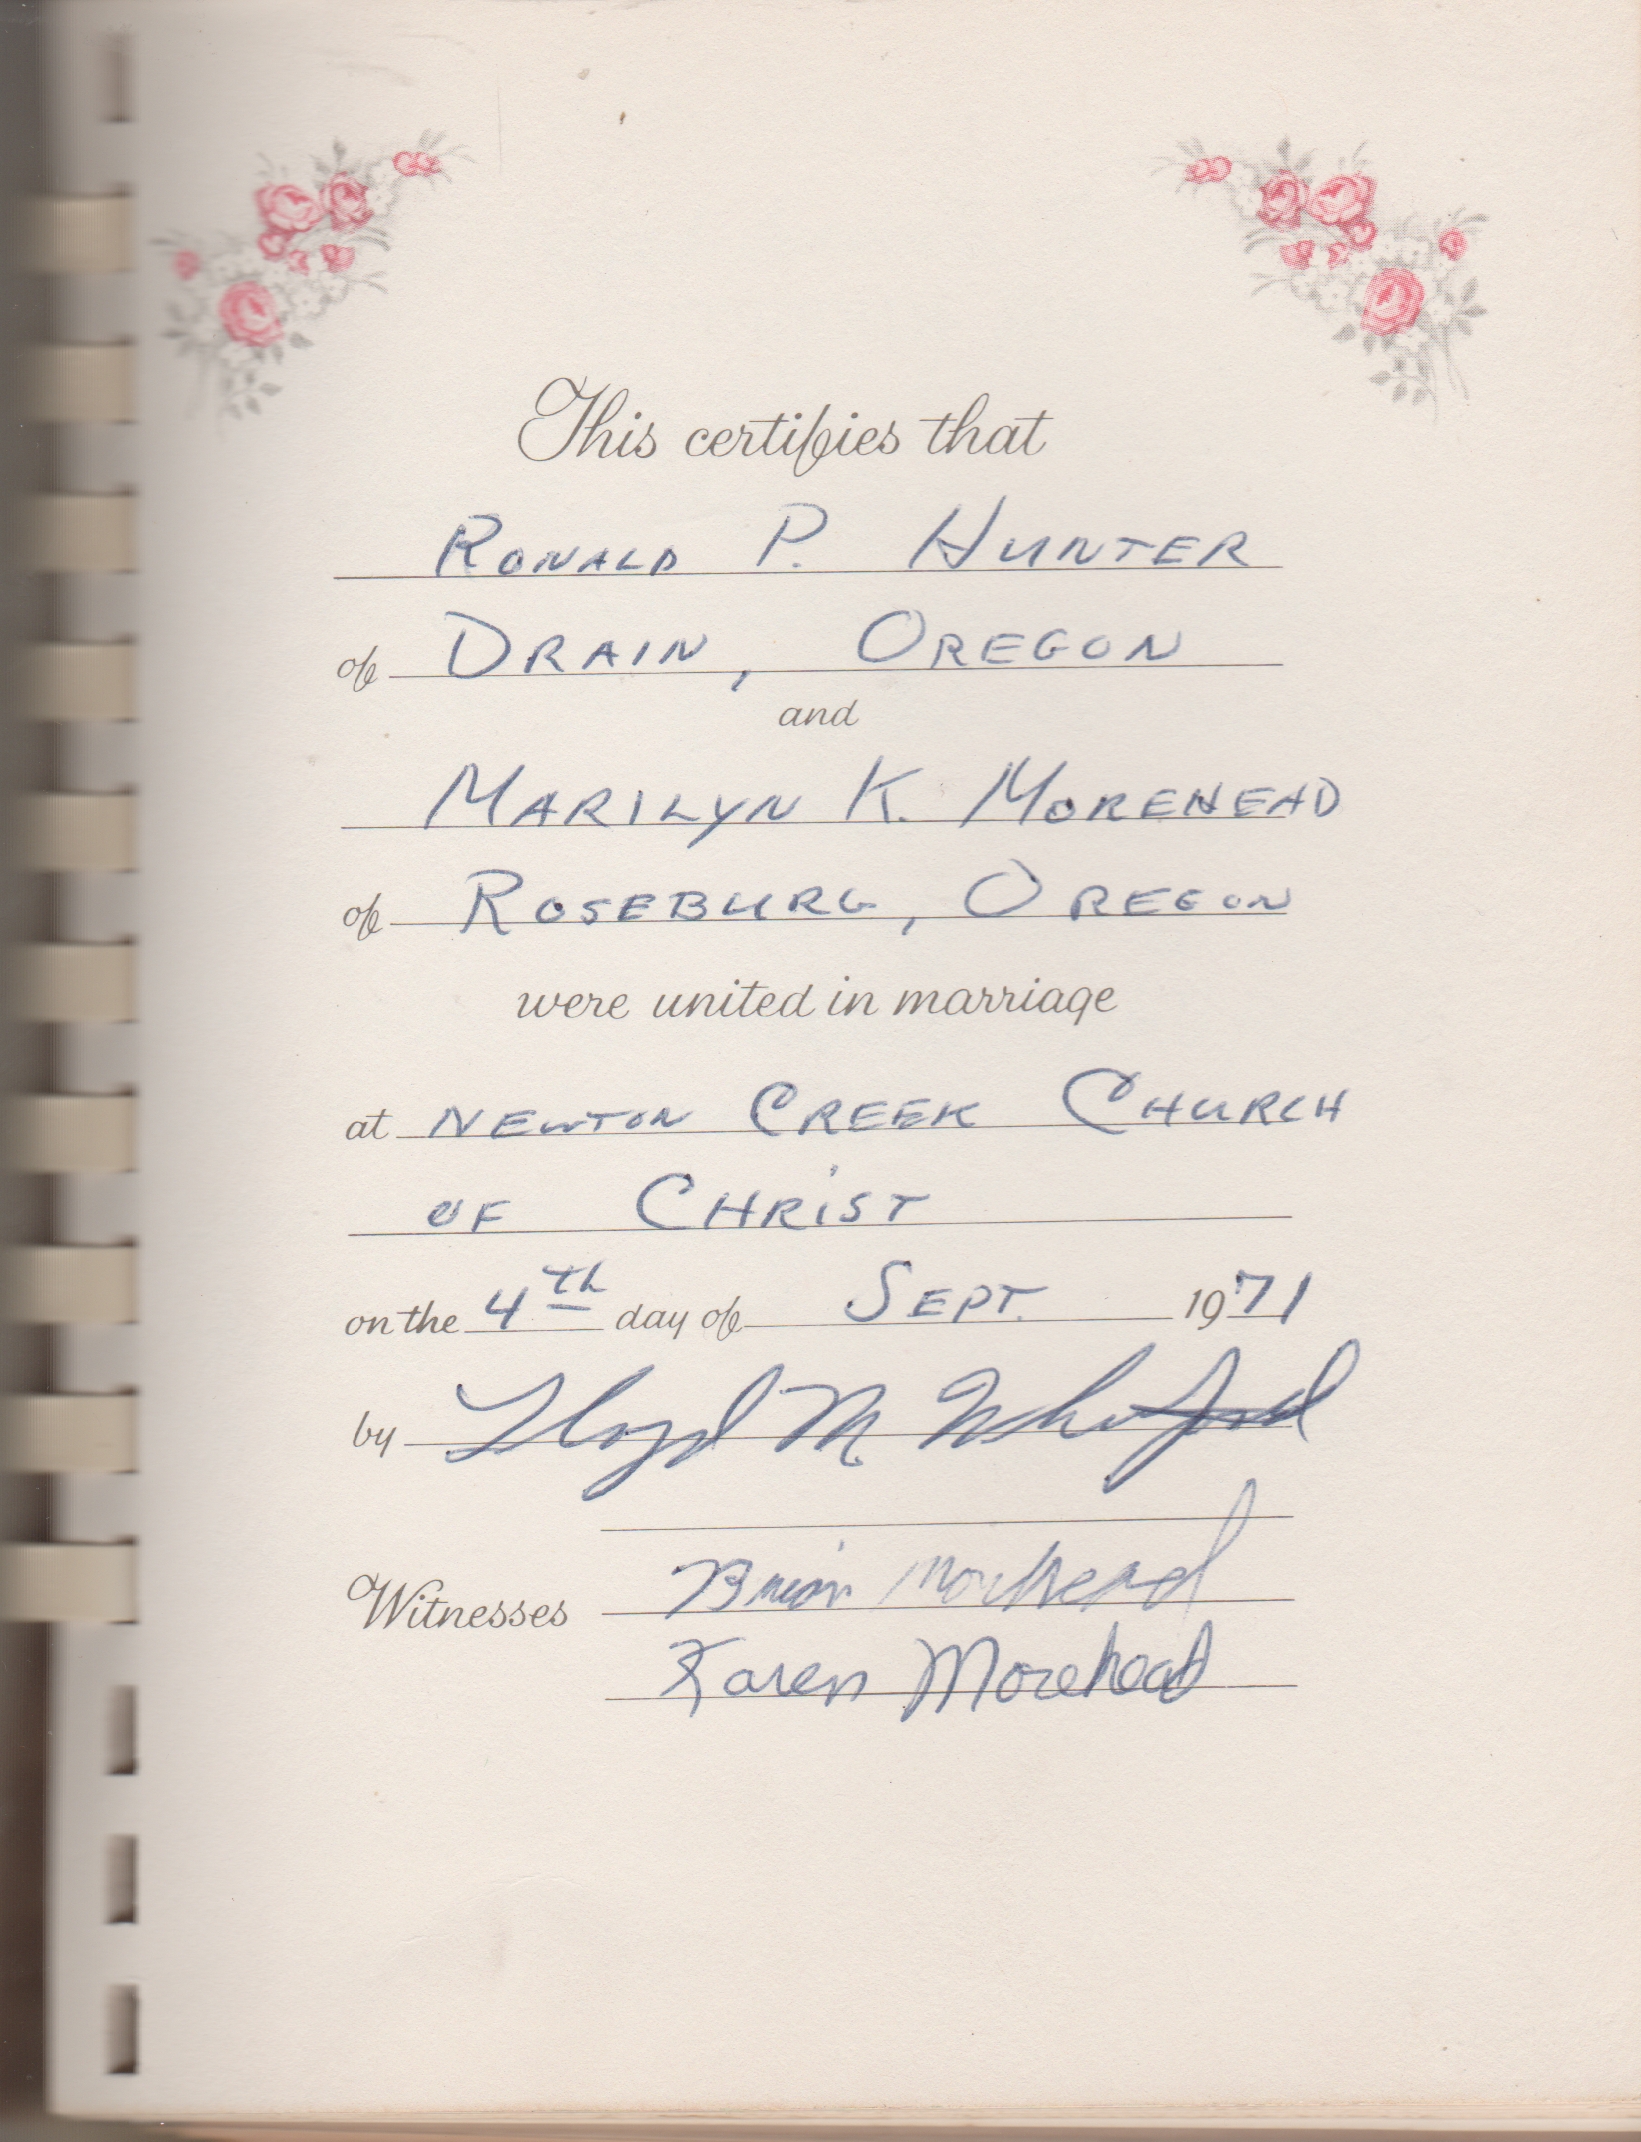 1971-09-04 - Saturday - Wedding - Ronald P. Hunter of Drain OR, Marilyn of Roseburg, at Newton Creek Church of Christ.jpg